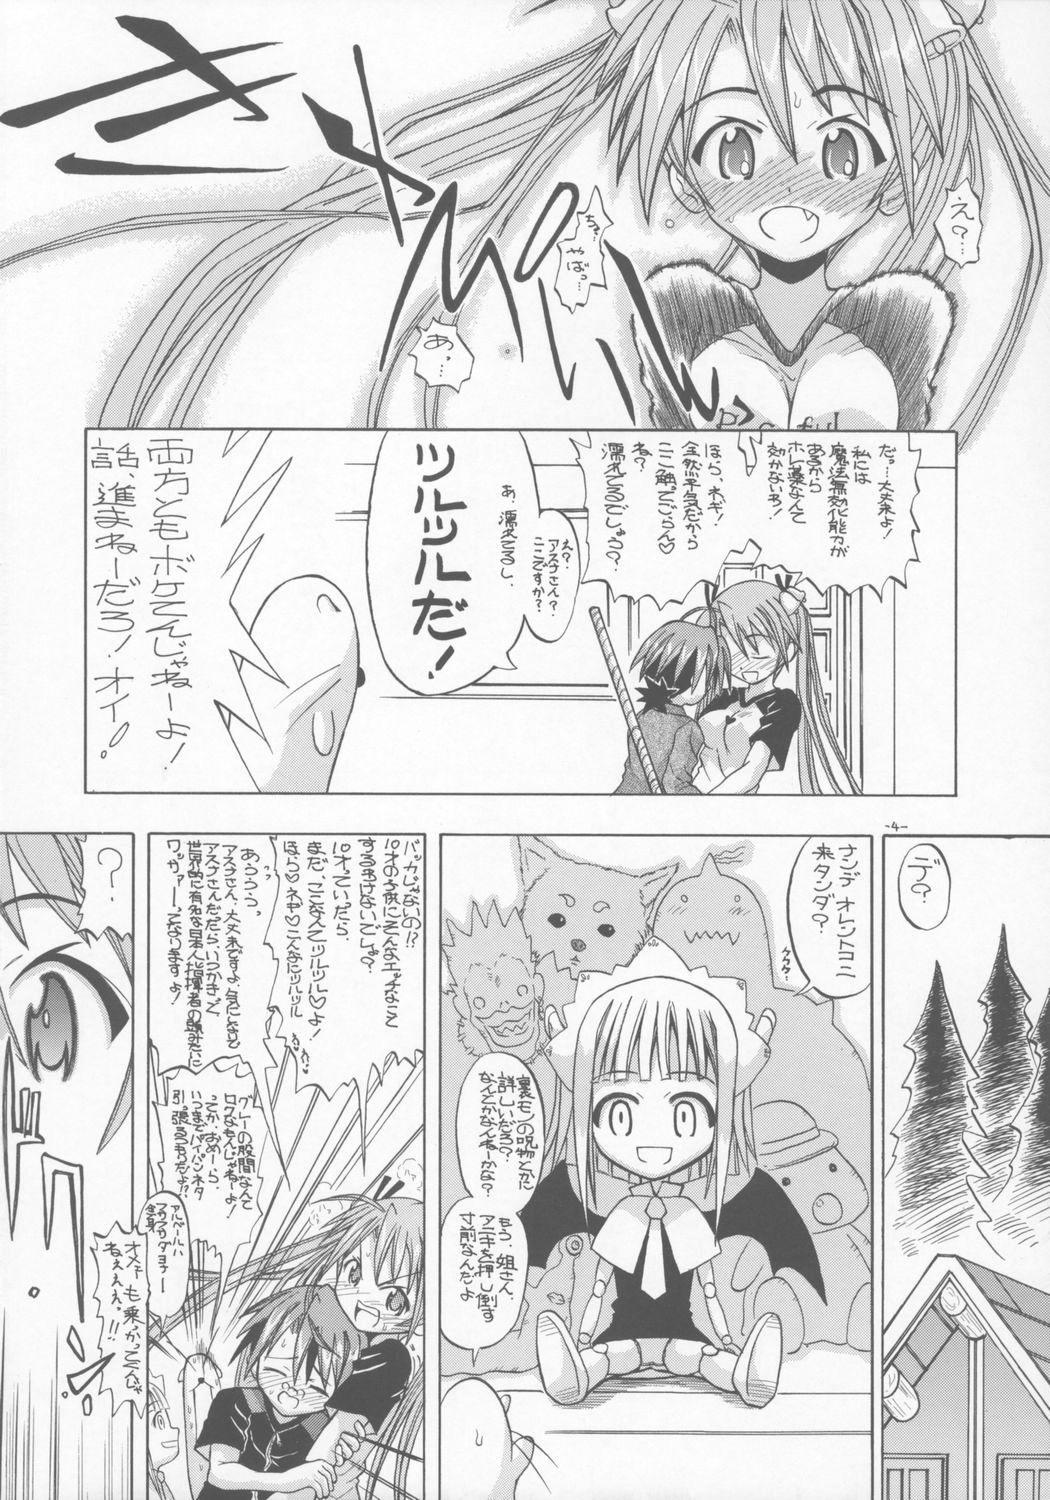 Hot AsuNAX! - Mahou sensei negima Curious - Page 3